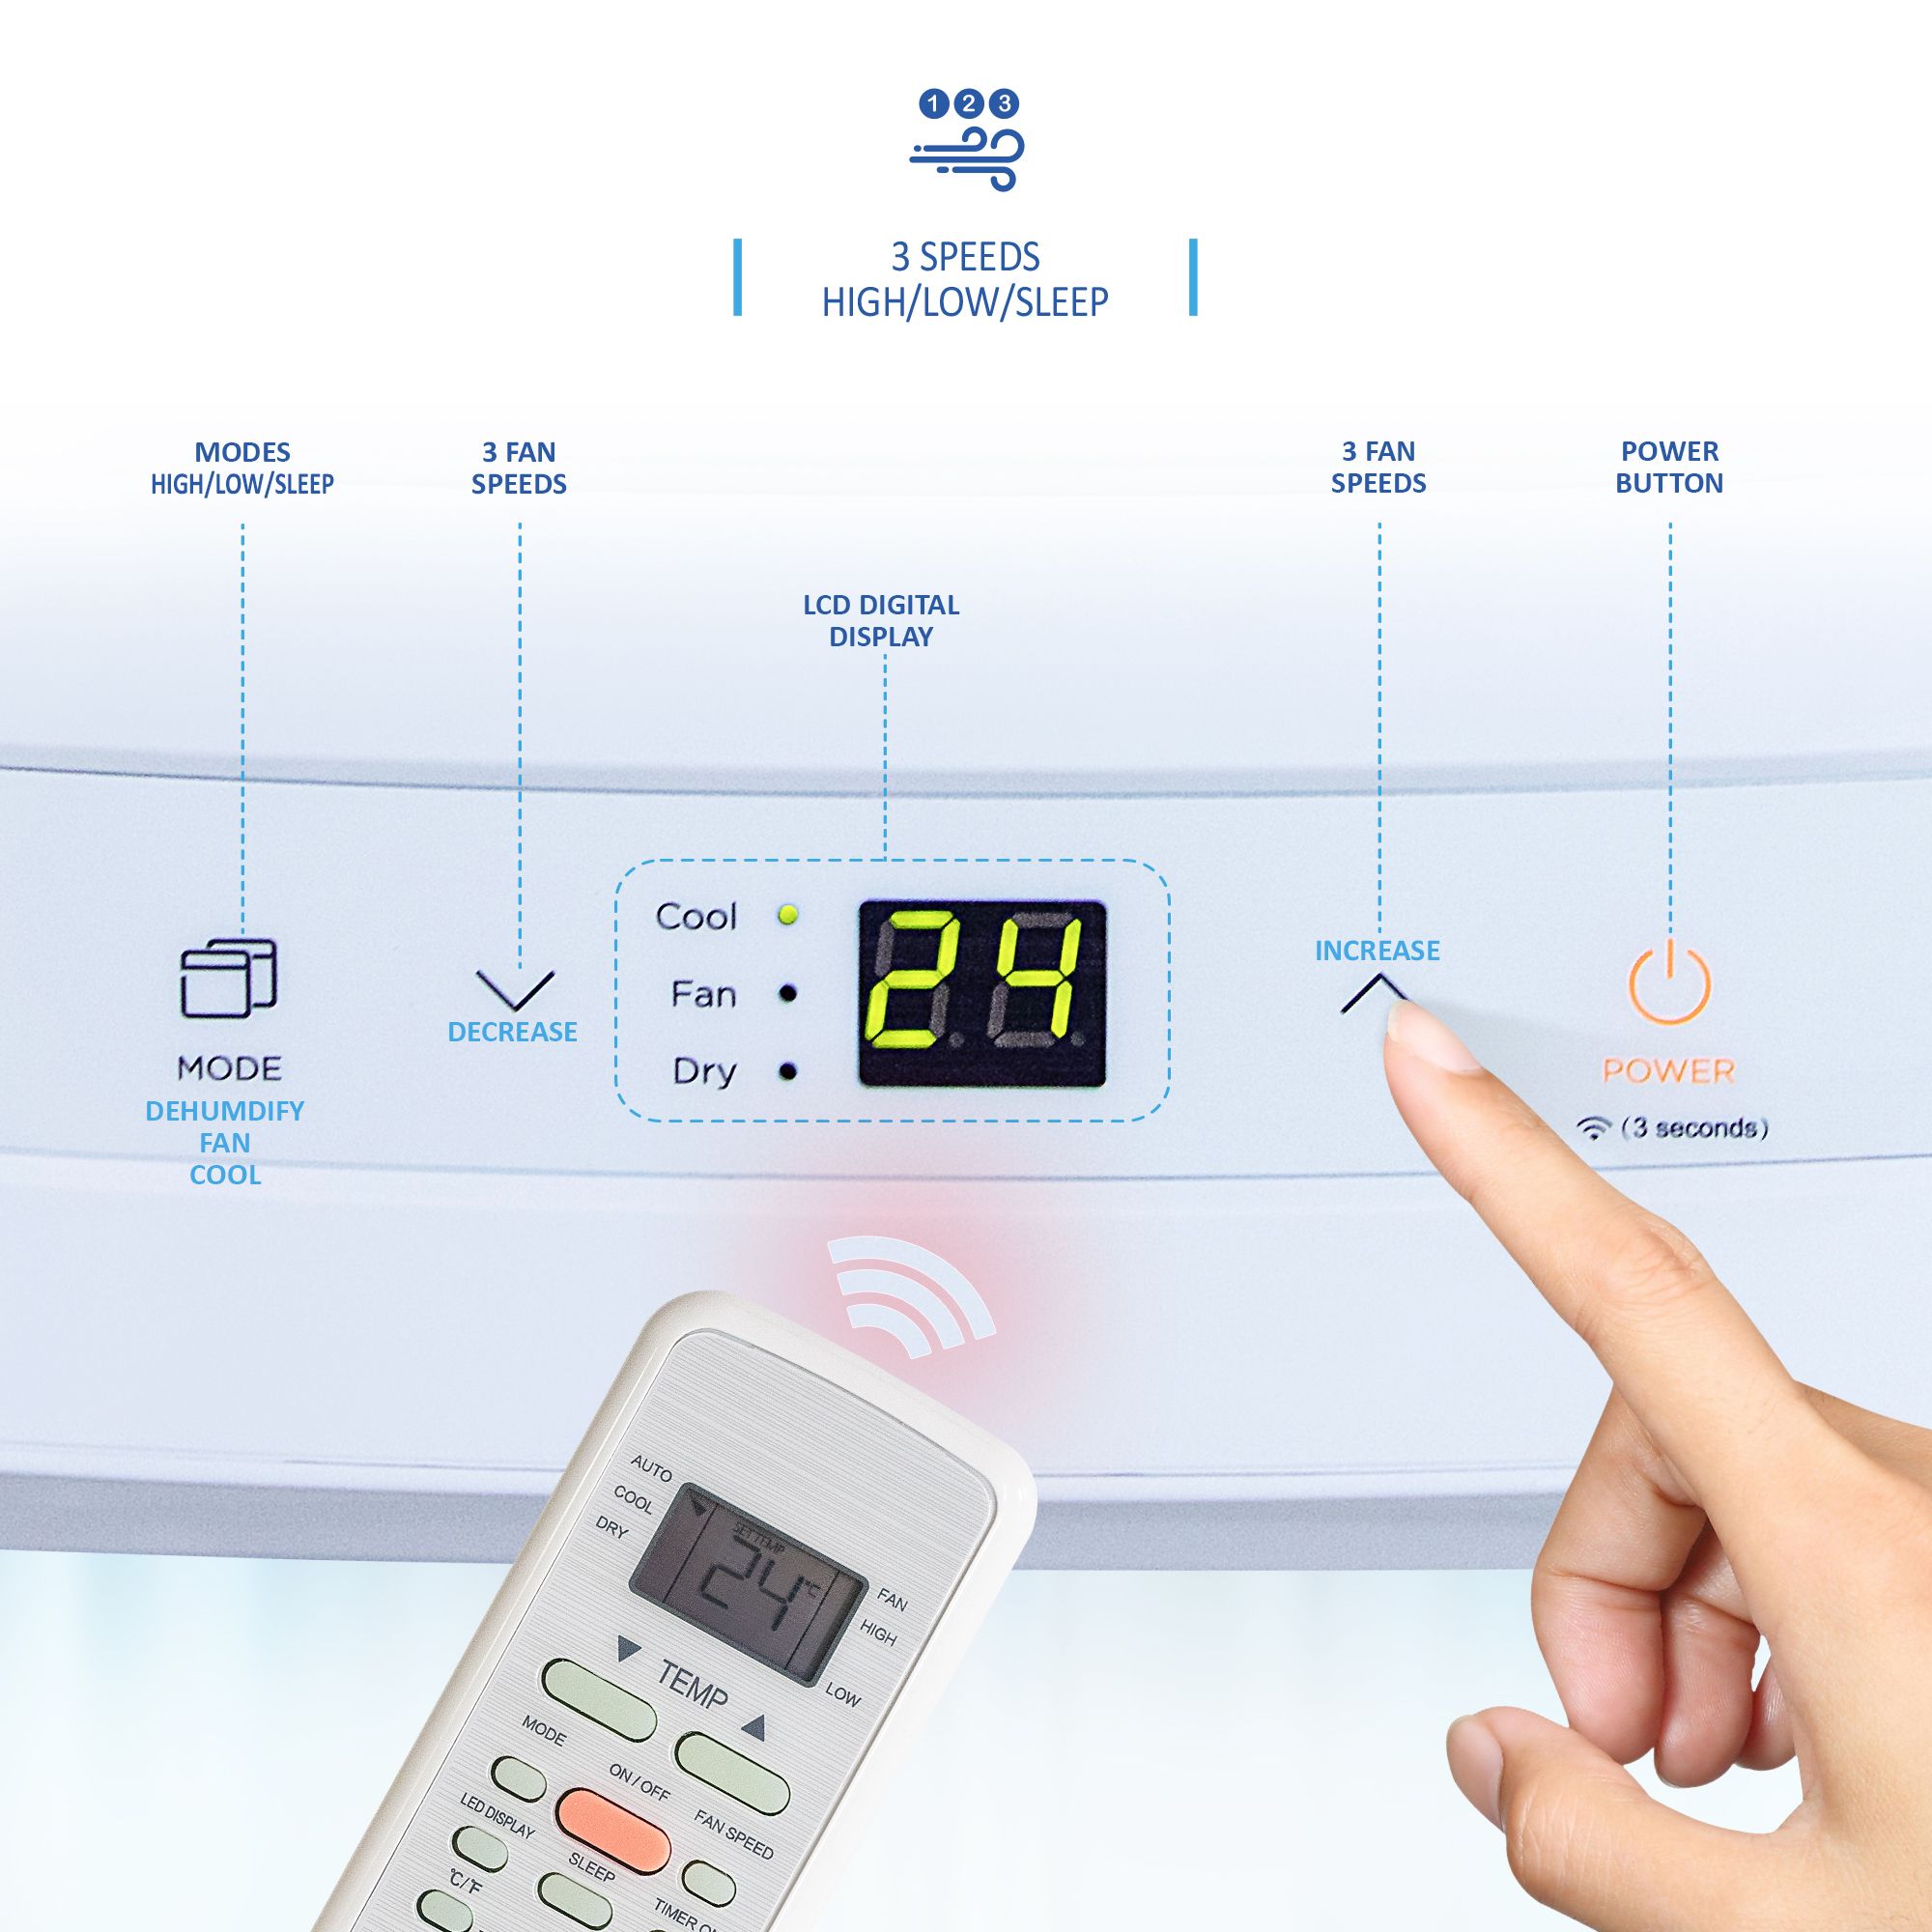 ALLAIR 8000BTU Smart Portable Air Conditioner Unit Remote - App Control